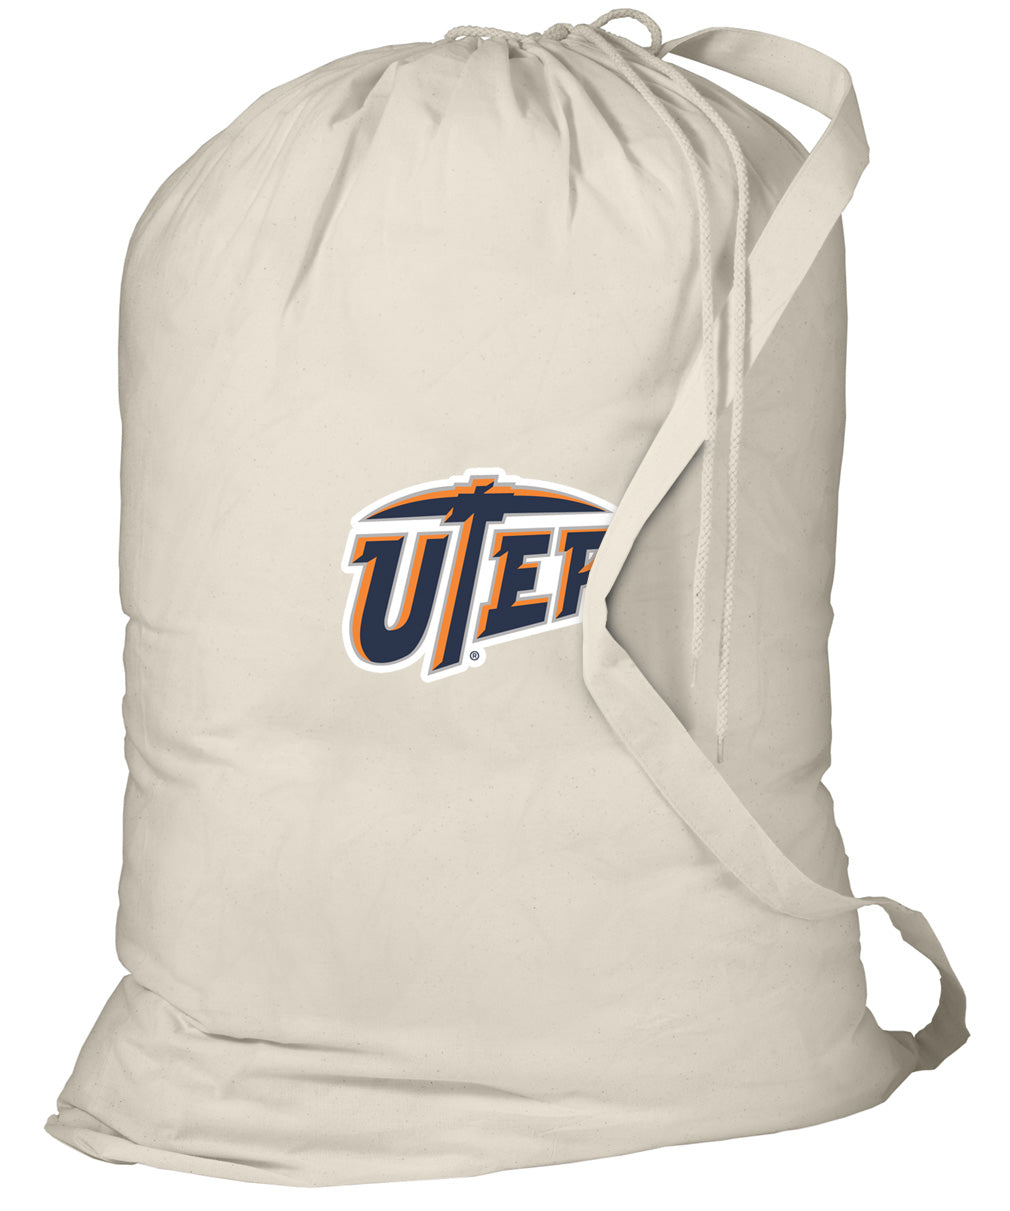 UTEP Laundry Bag University of Texas El Paso Clothes Bag